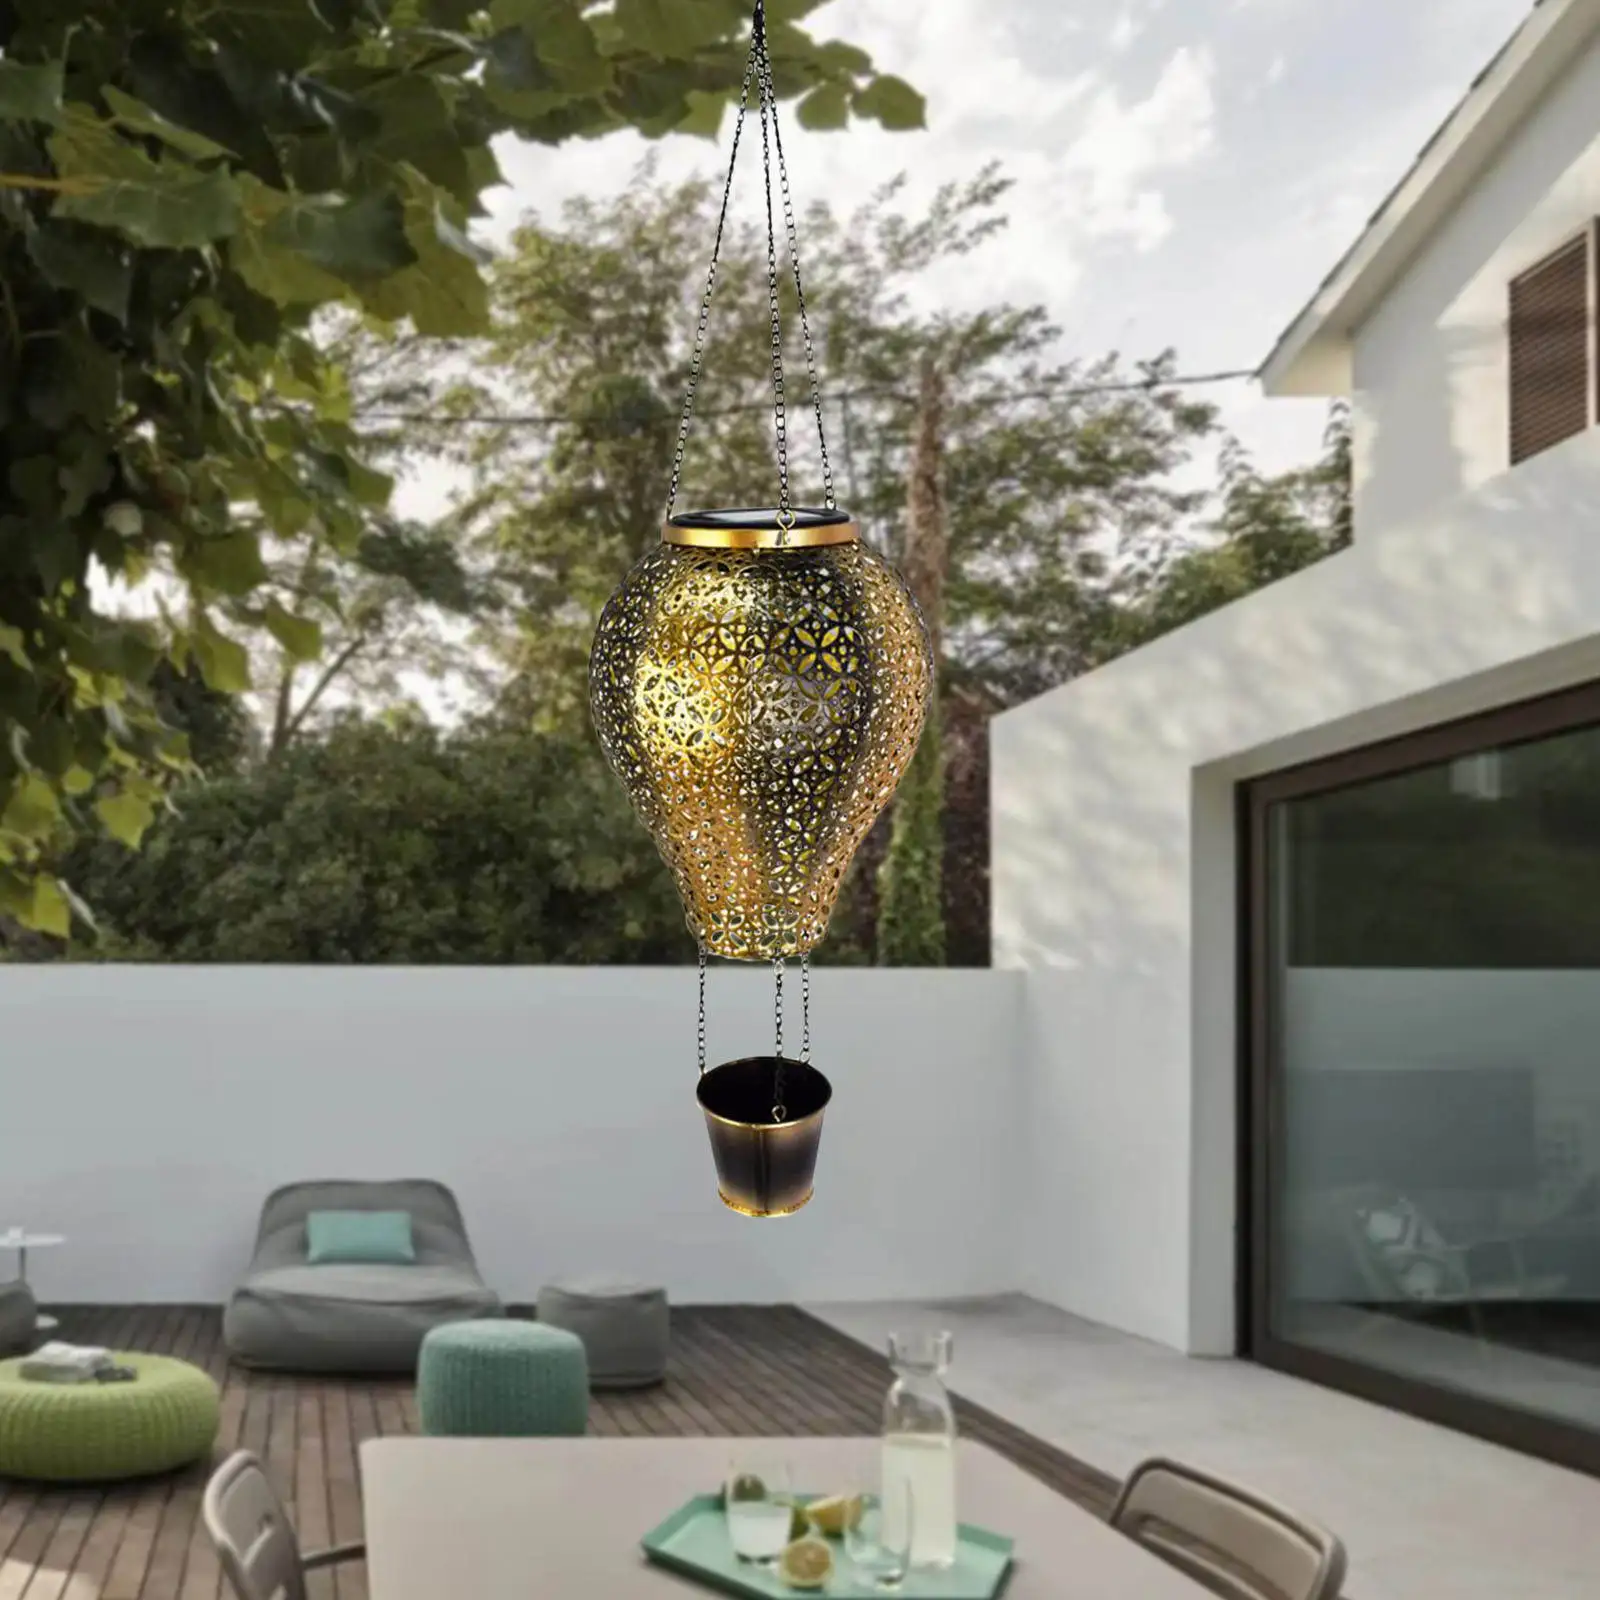 Hot Air Balloon Lantern Solar Ground Garden Light Yard Decor Outdoor Lamp